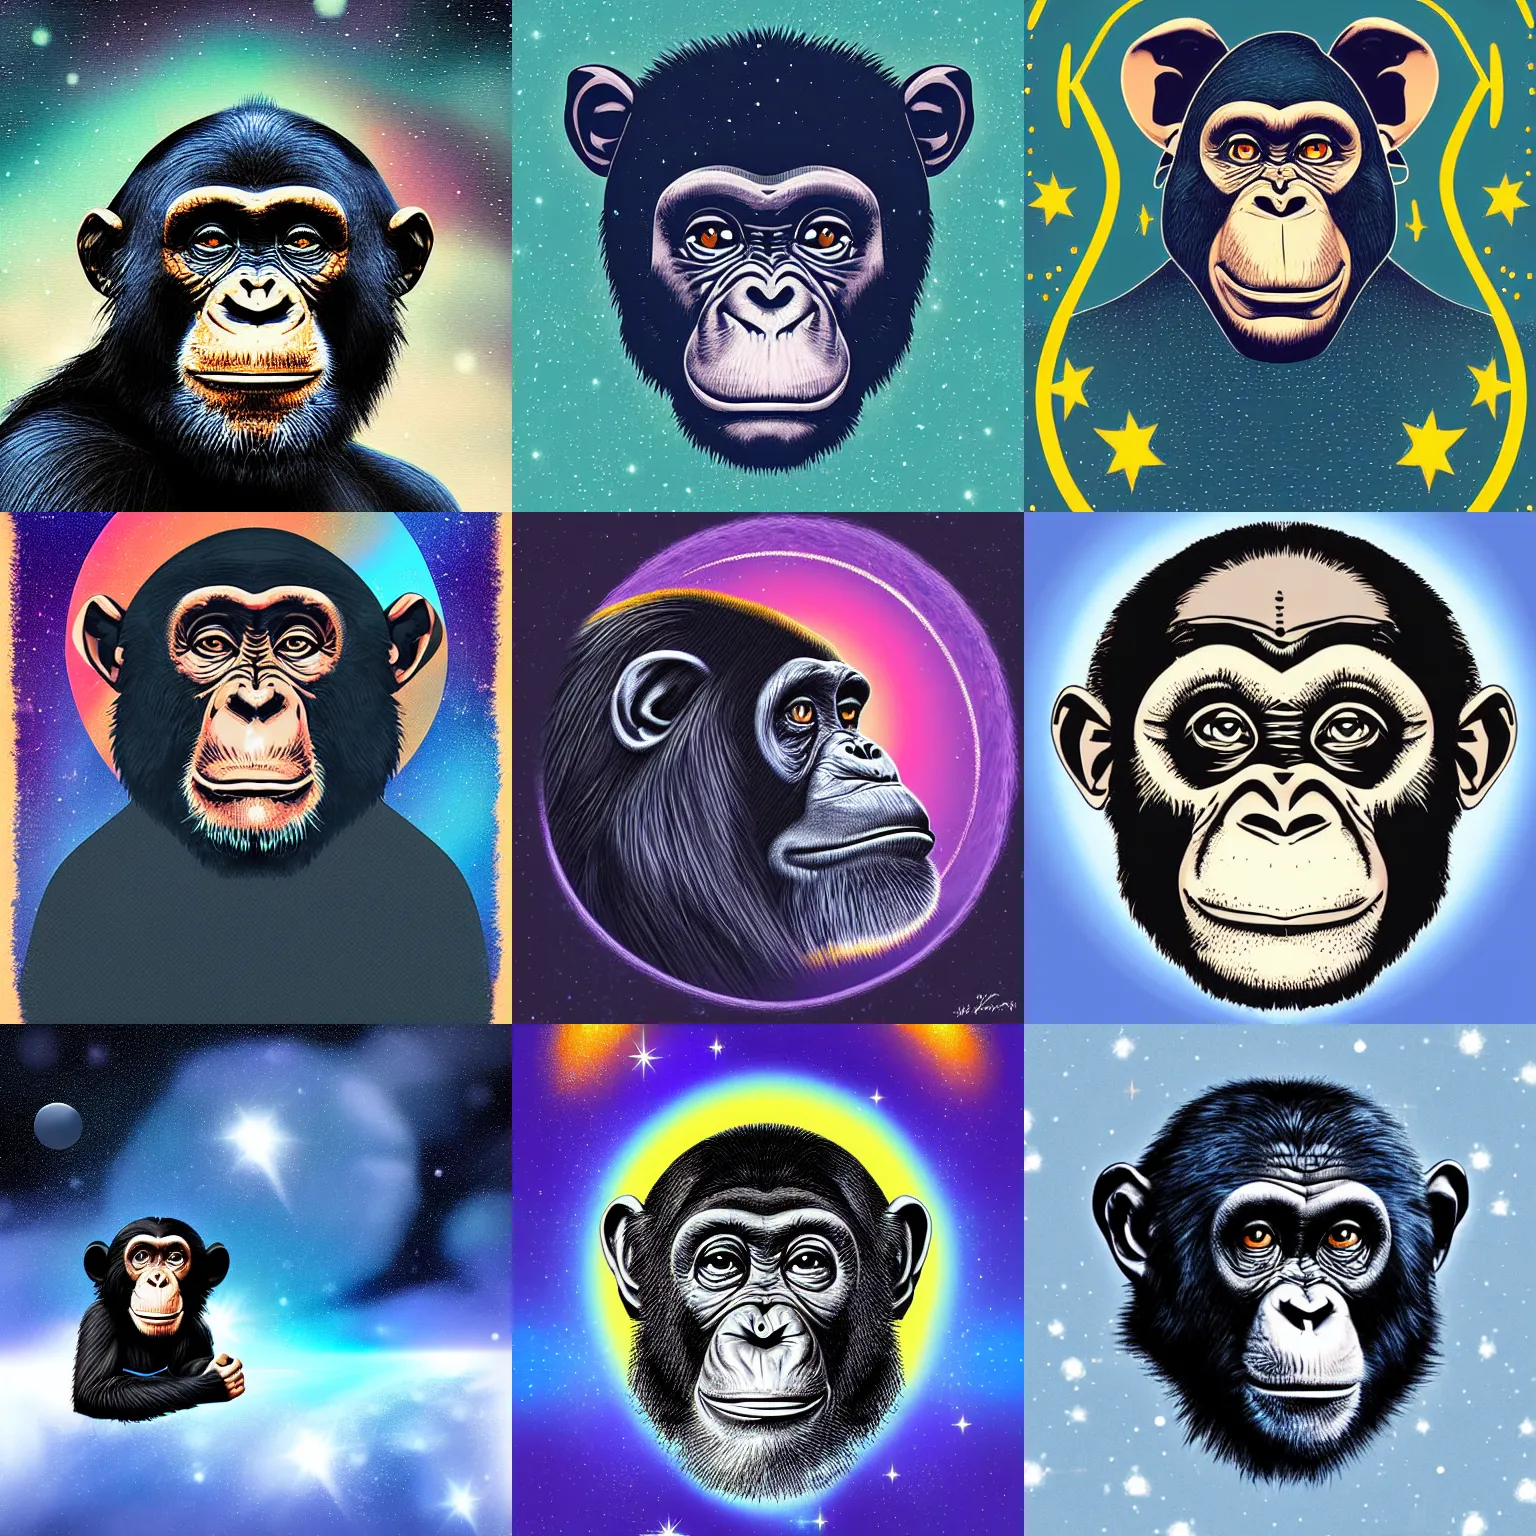 Prompt: portrait of chimpanzee in space, stars in the background, dark blue background, digital art